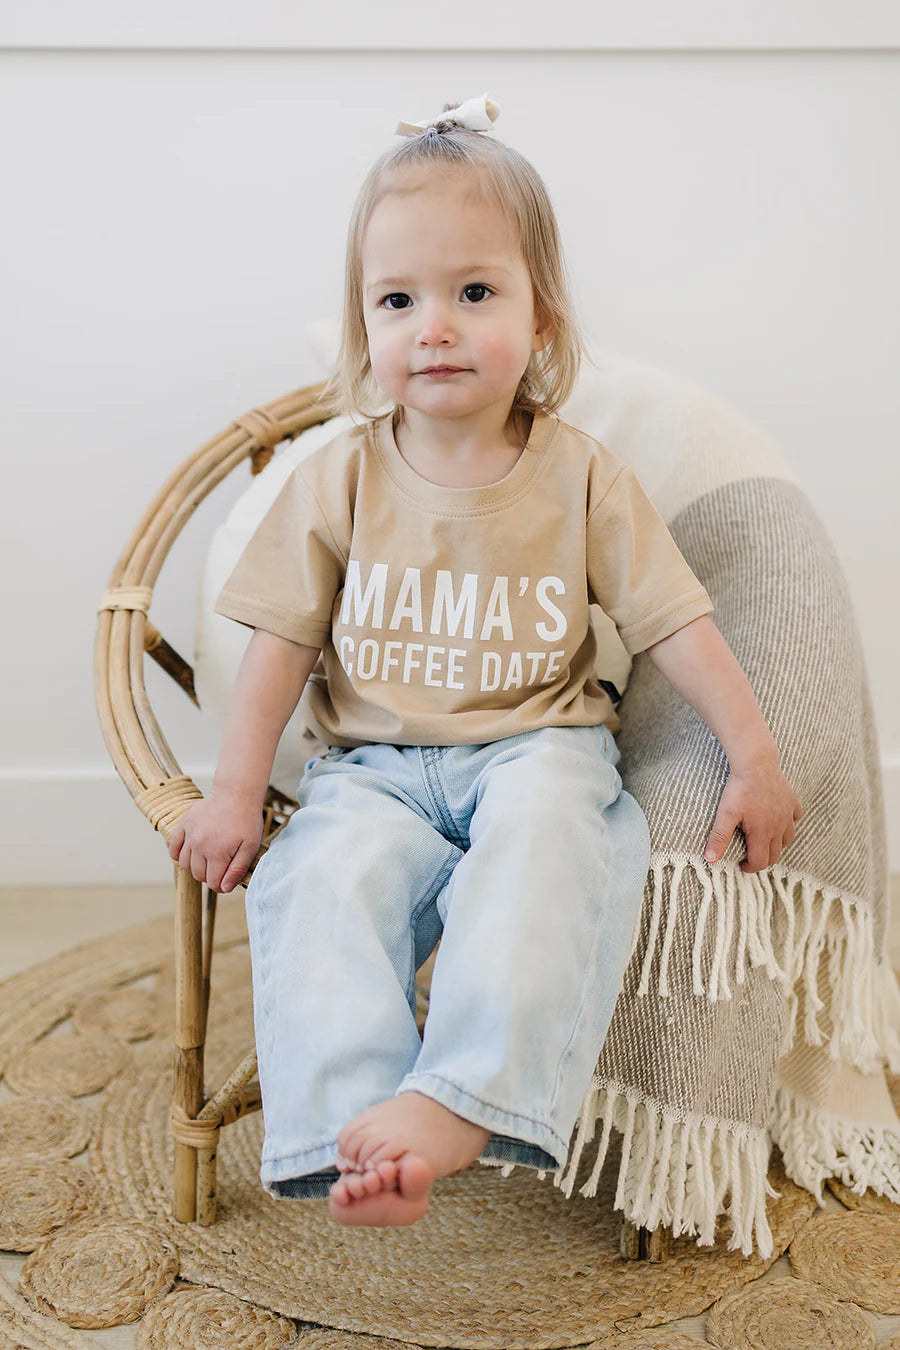 Mama's Coffee Date T-Shirt